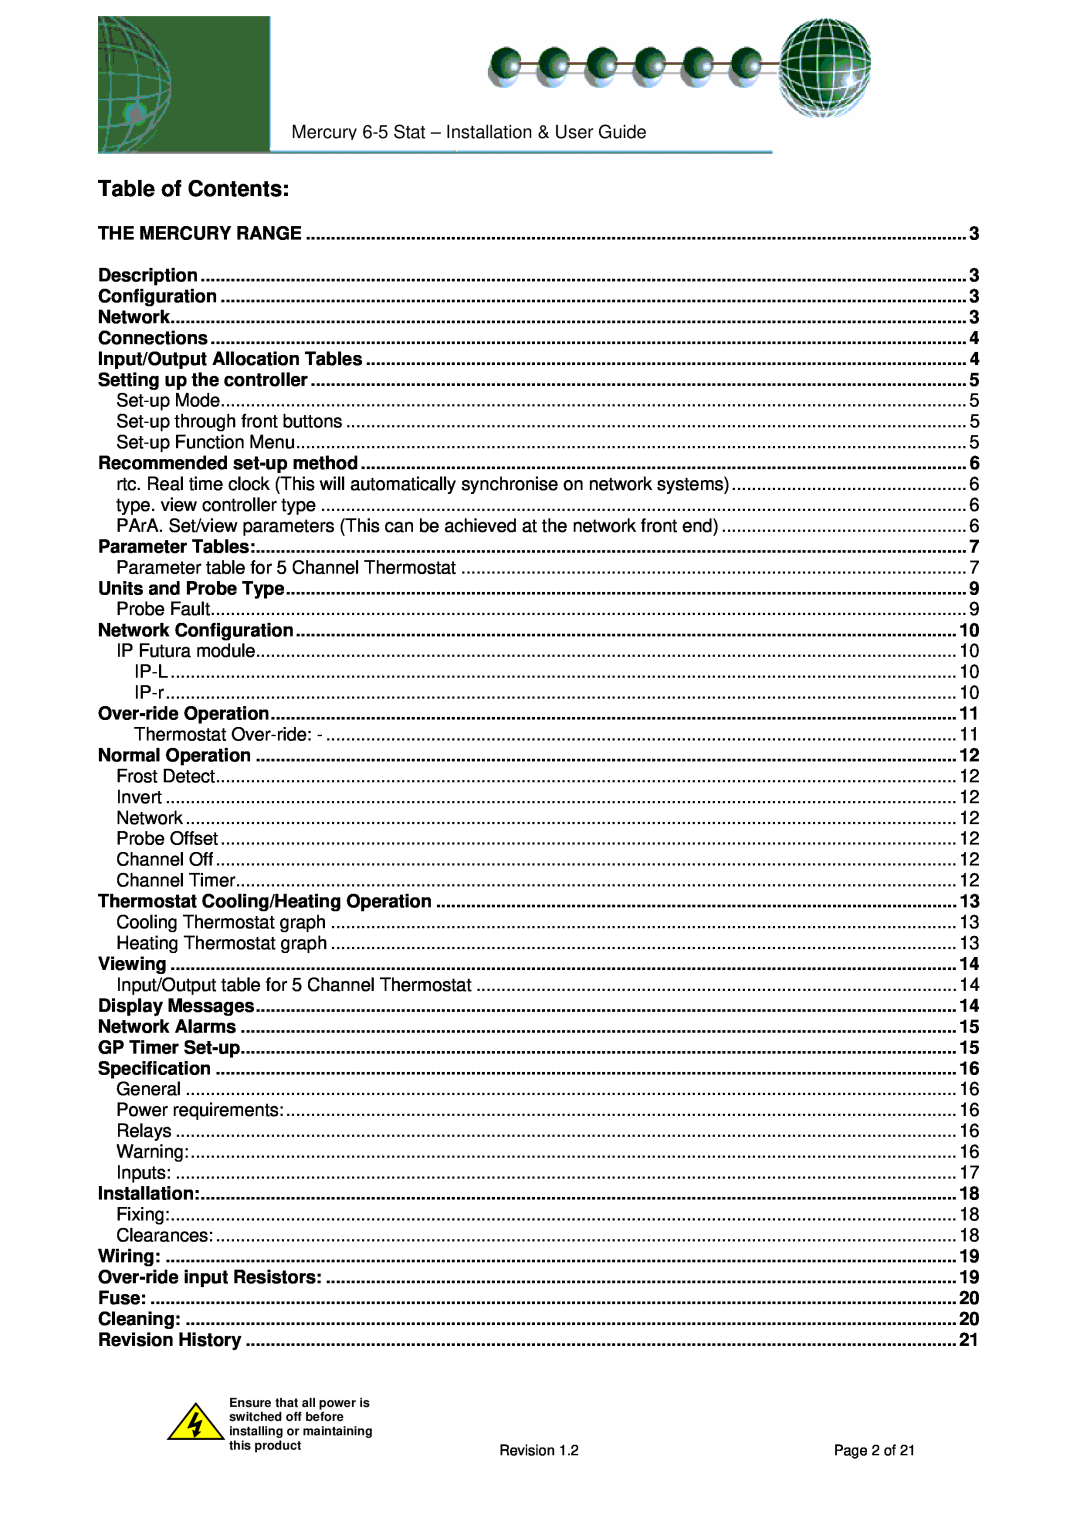 Mercury PR0091 manual Table of Contents 